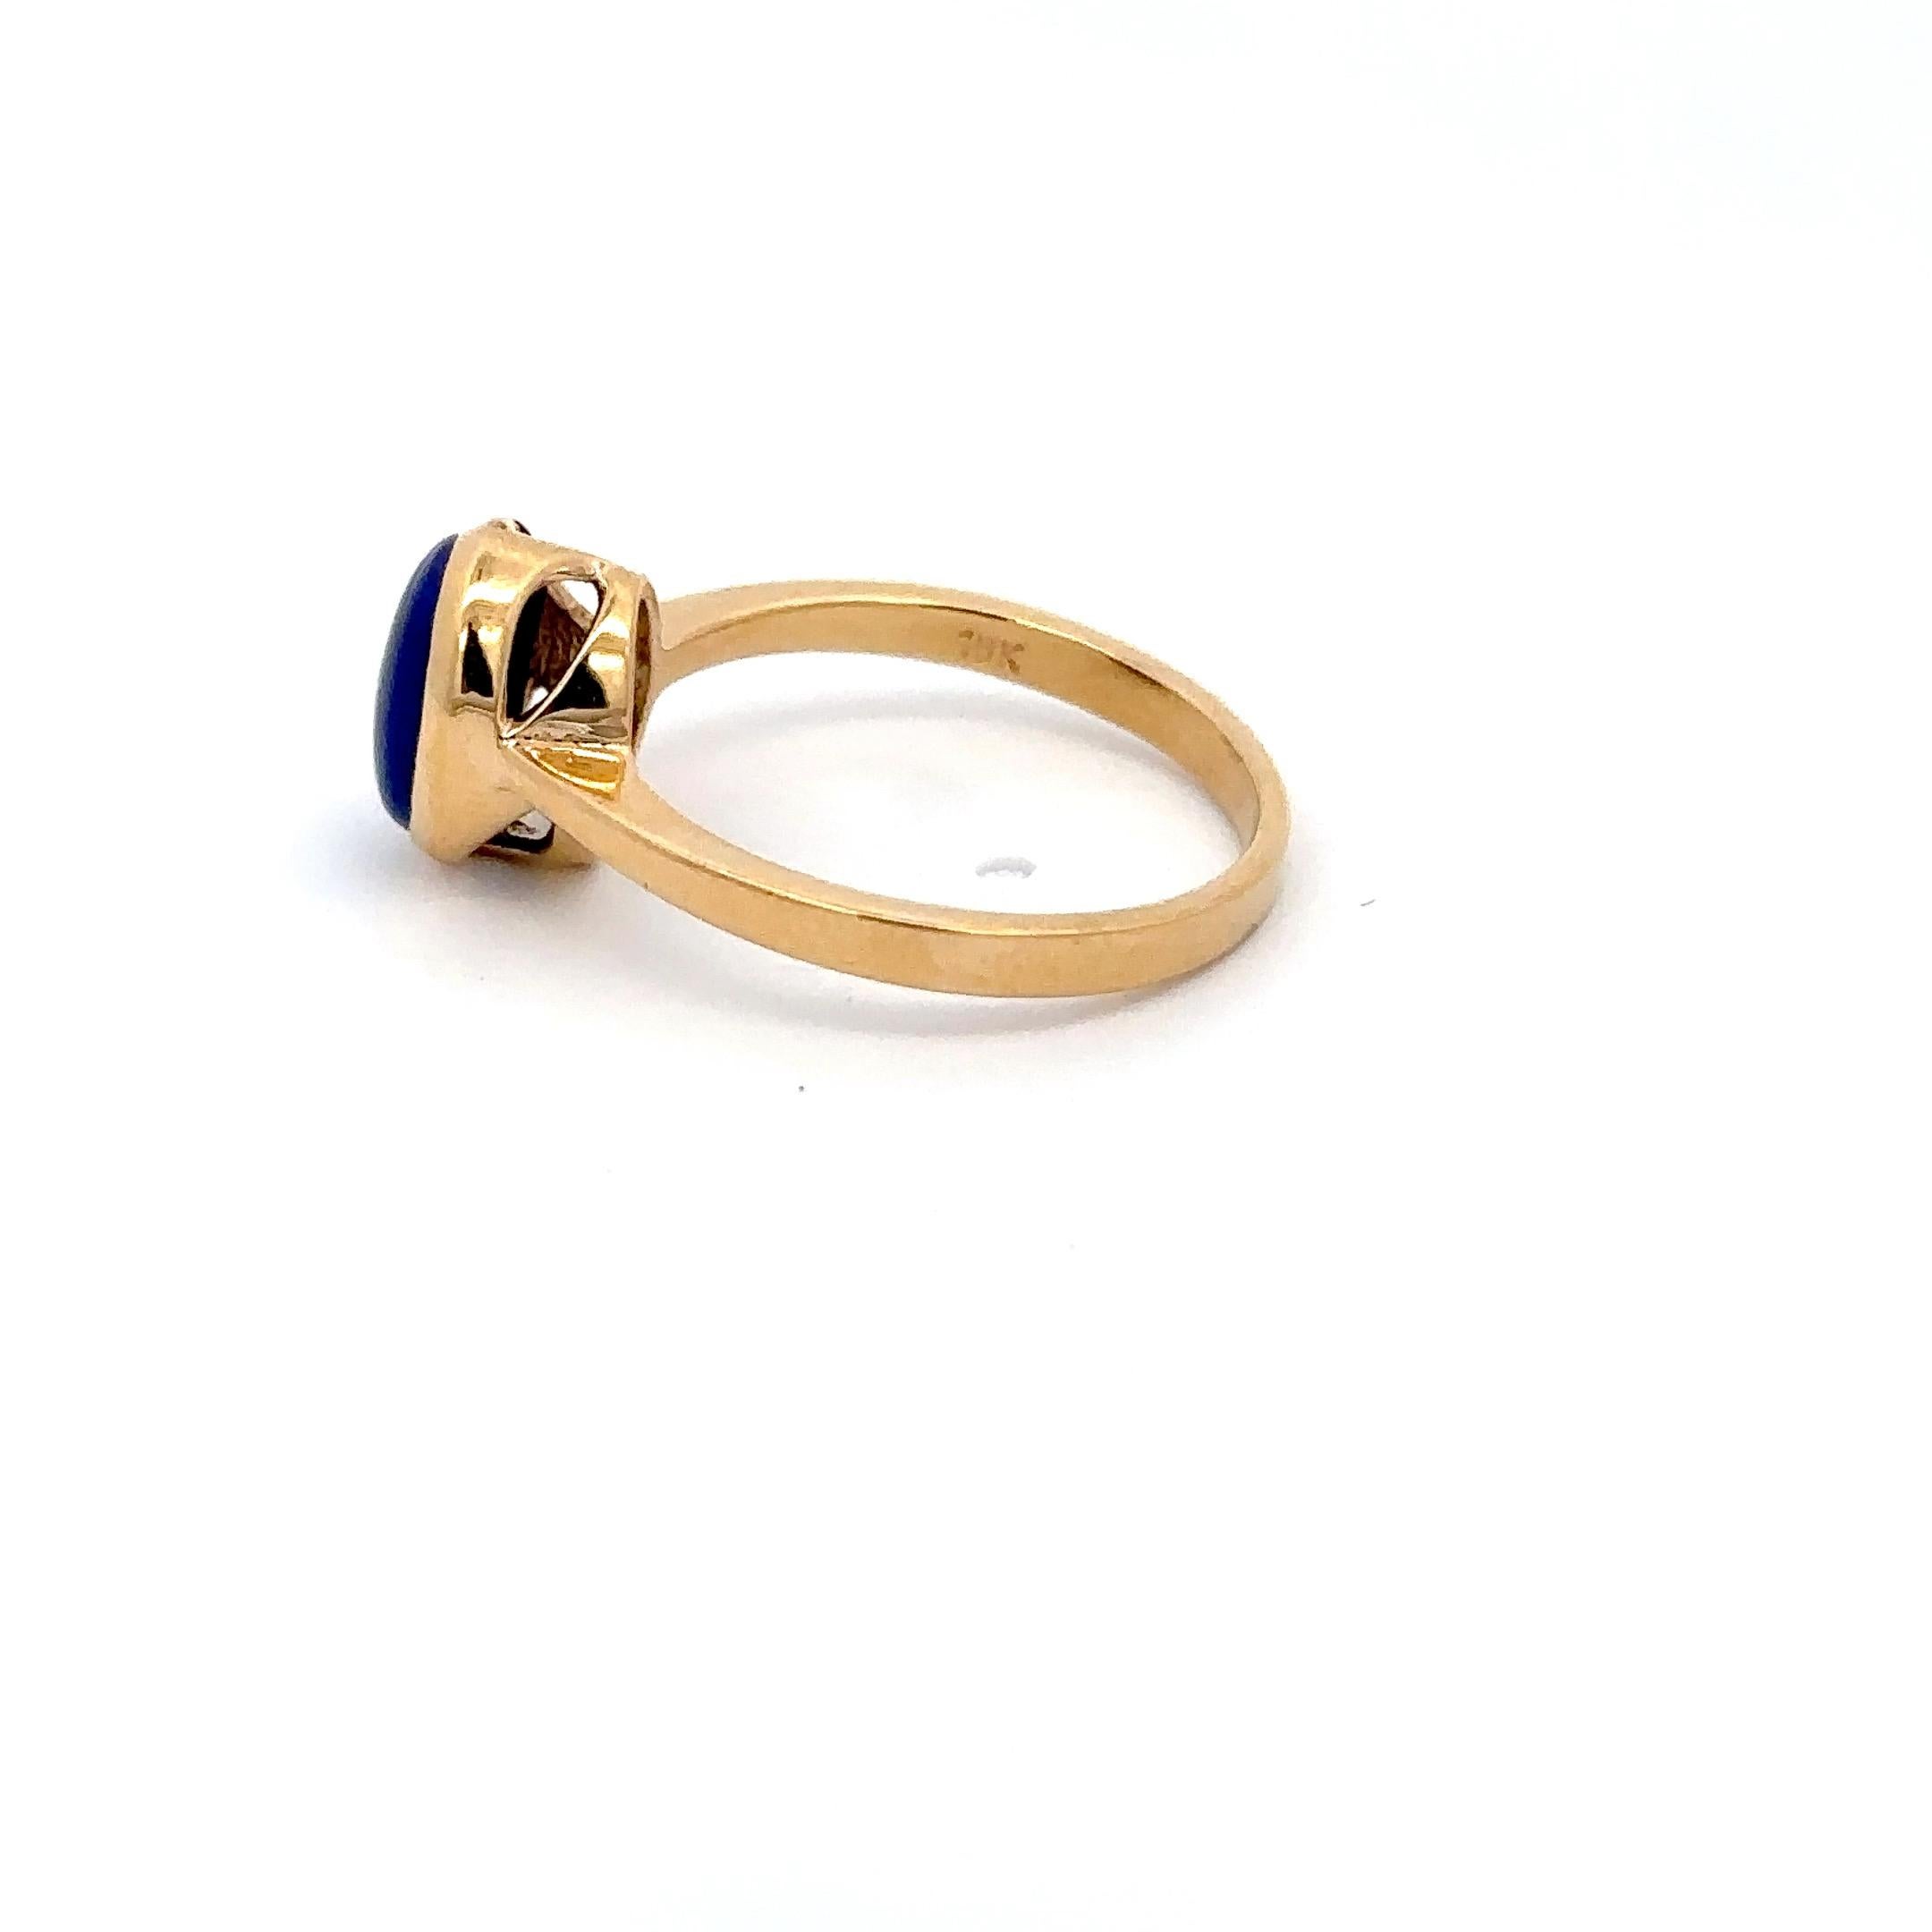 Vivid Blue Oval Lapis Lazuli Ring Made in 18 Karat Solid Yellow Gold Unisex Ring 4